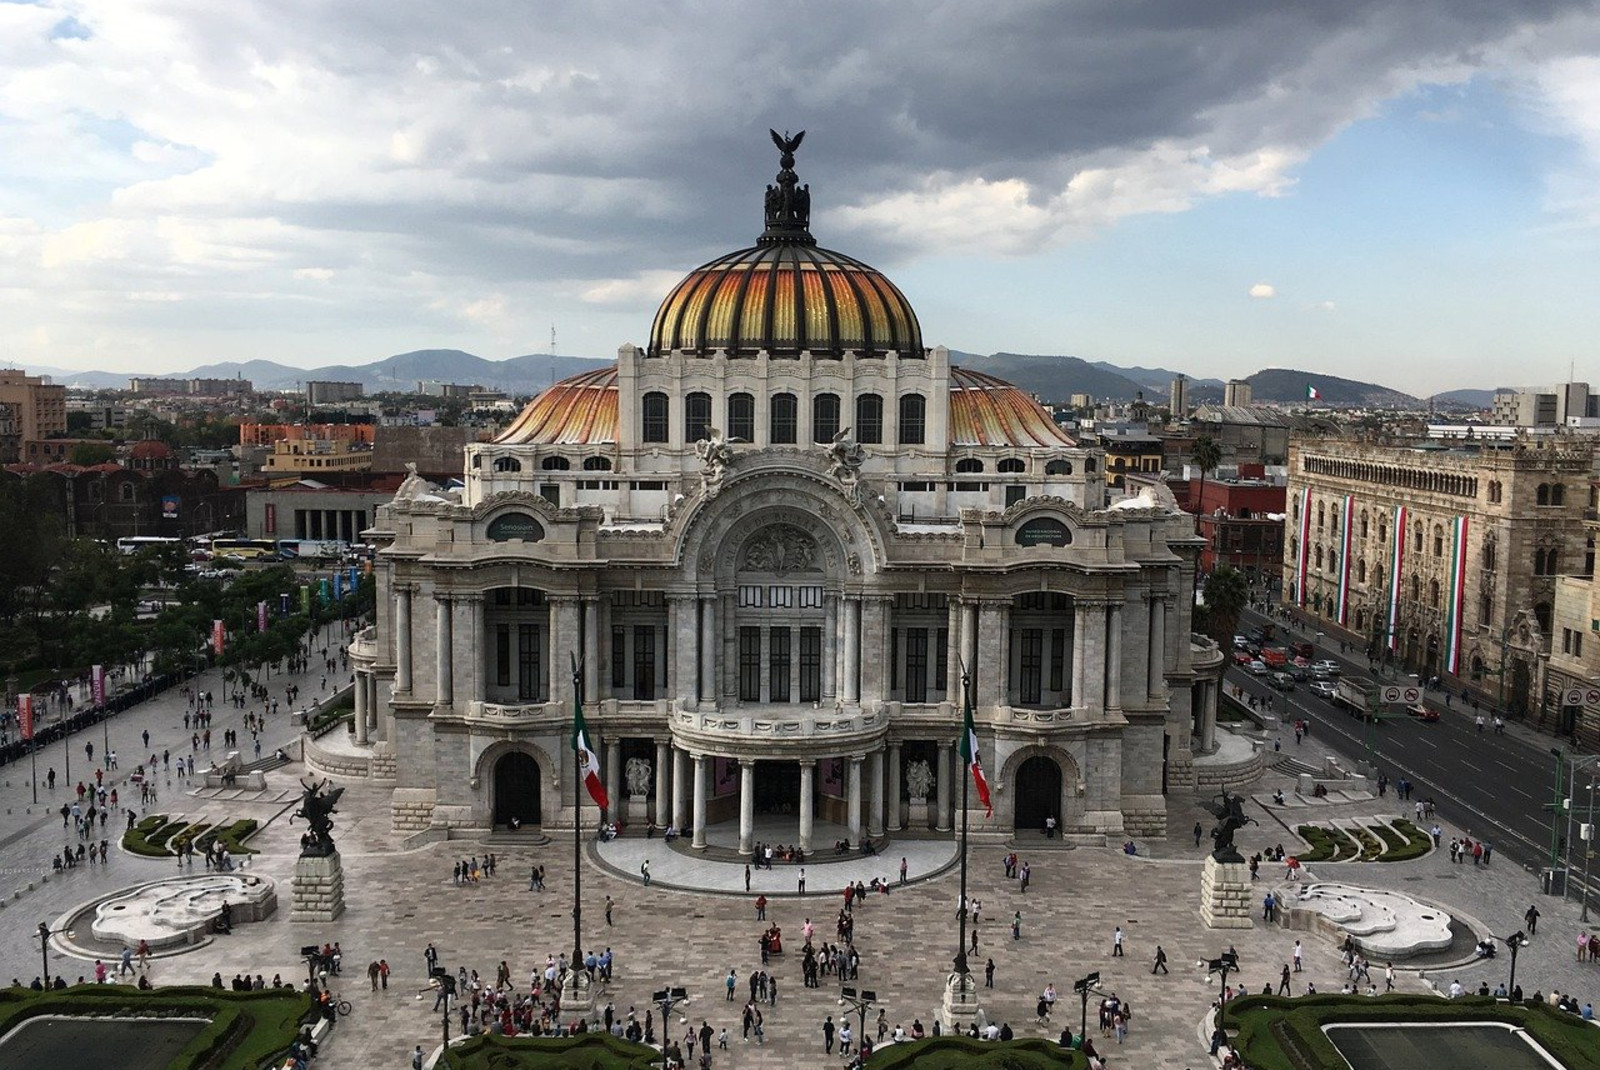 Birds eye view of the art museum The Palacio de Bellas Artes in Mexico City.